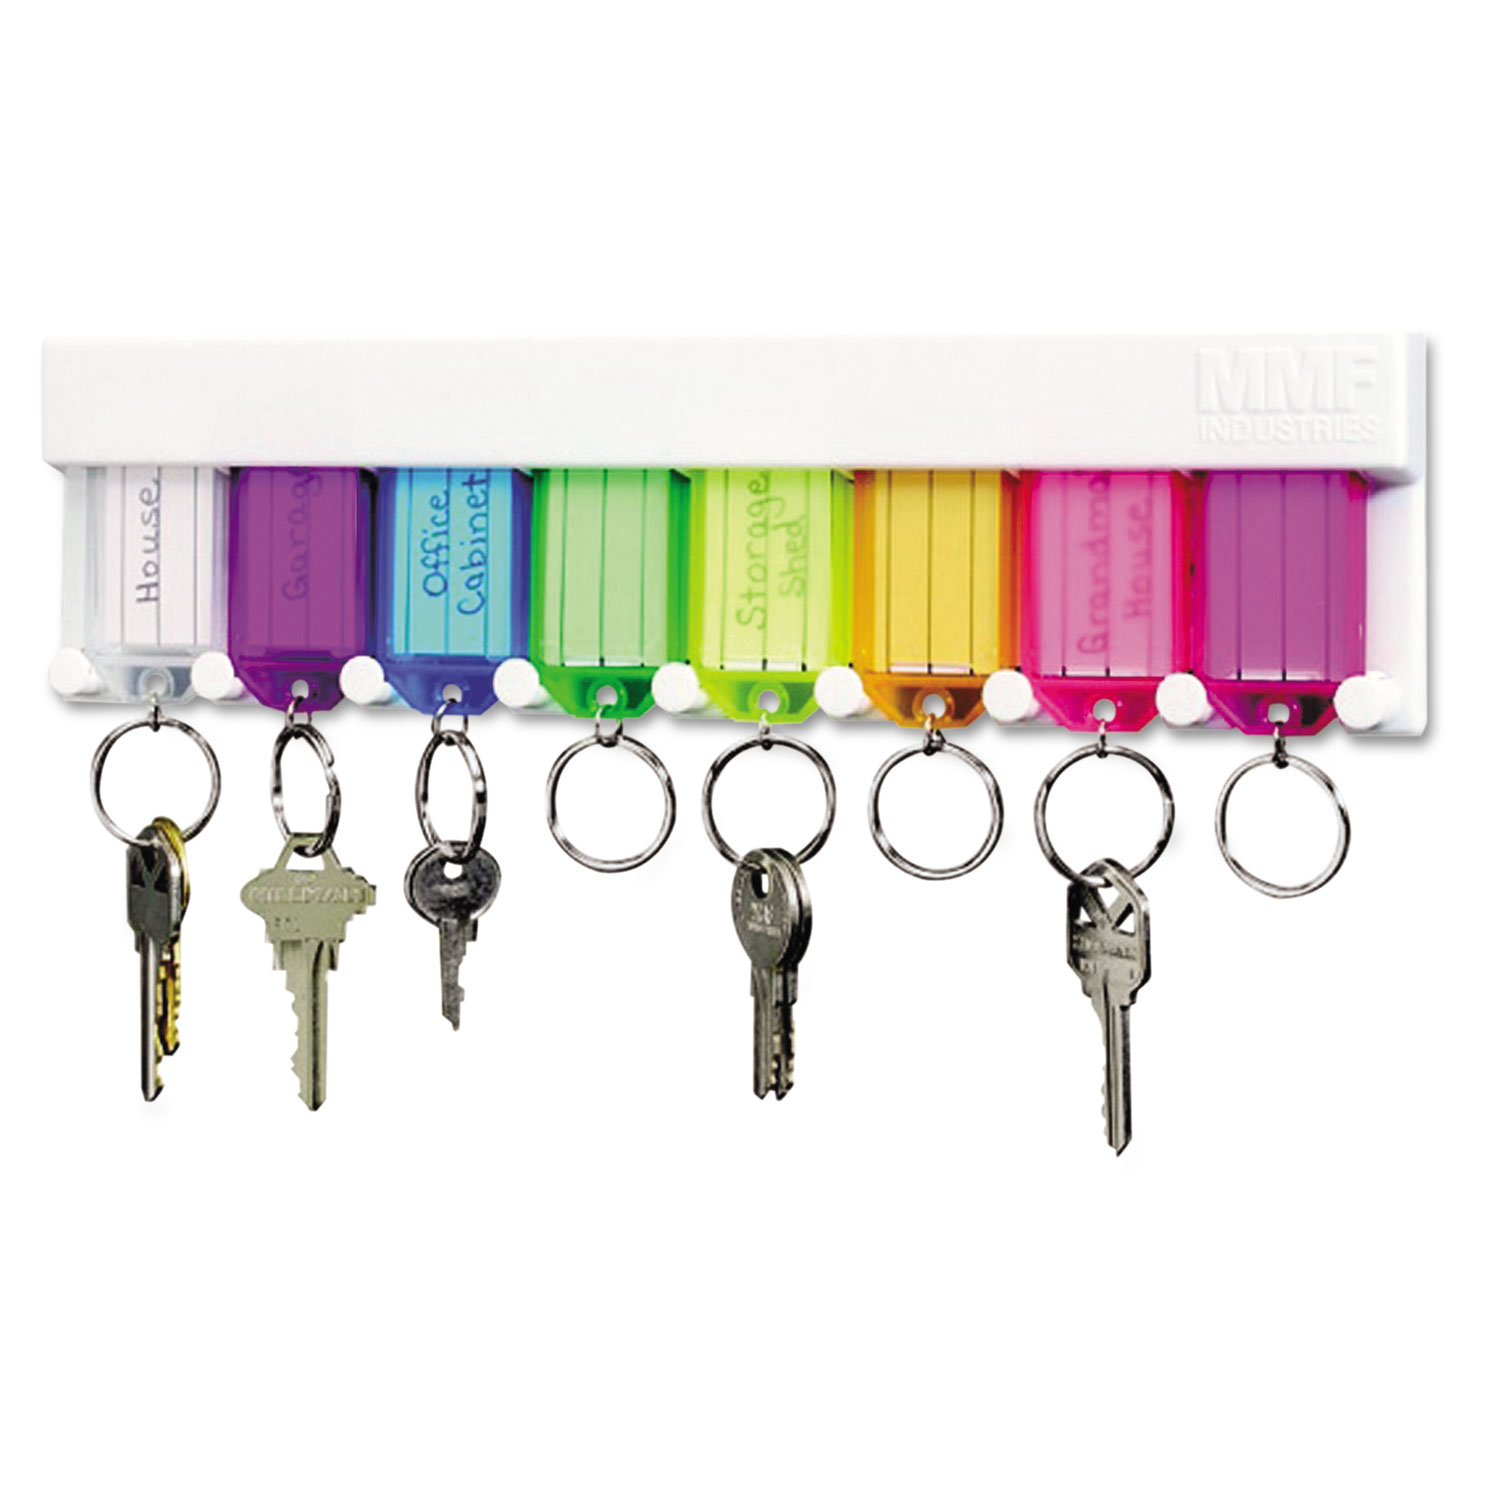  SteelMaster 201400847 Multi-Color Key Rack, 8-Key, 2 3/4 x 1/2 x 10 1/2, Plastic, White (MMF201400847) 